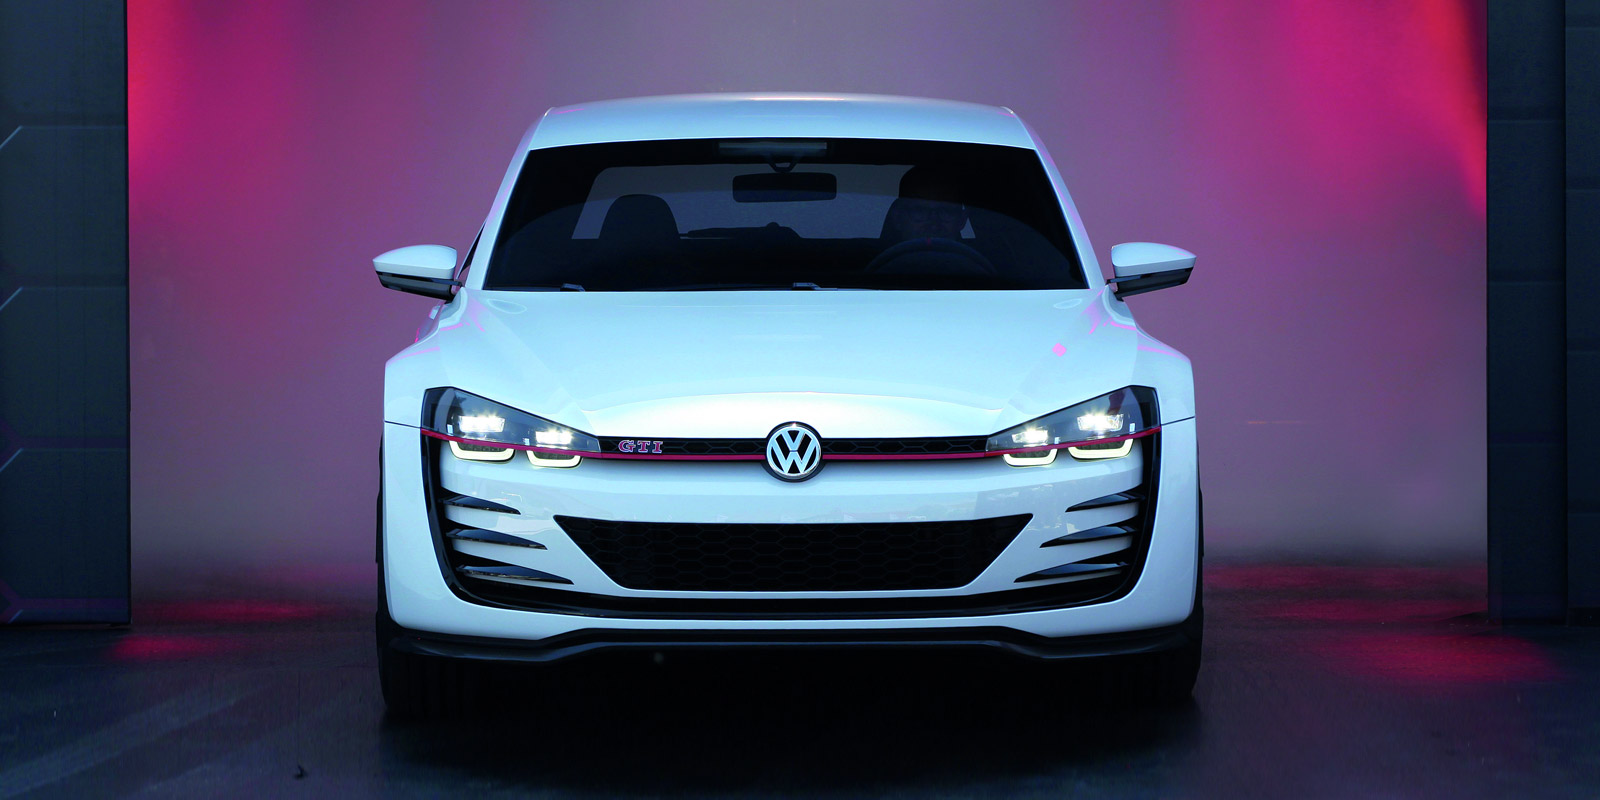 Volkswagen Golf Gti Price Specs Release Date Carwow | My XXX Hot Girl